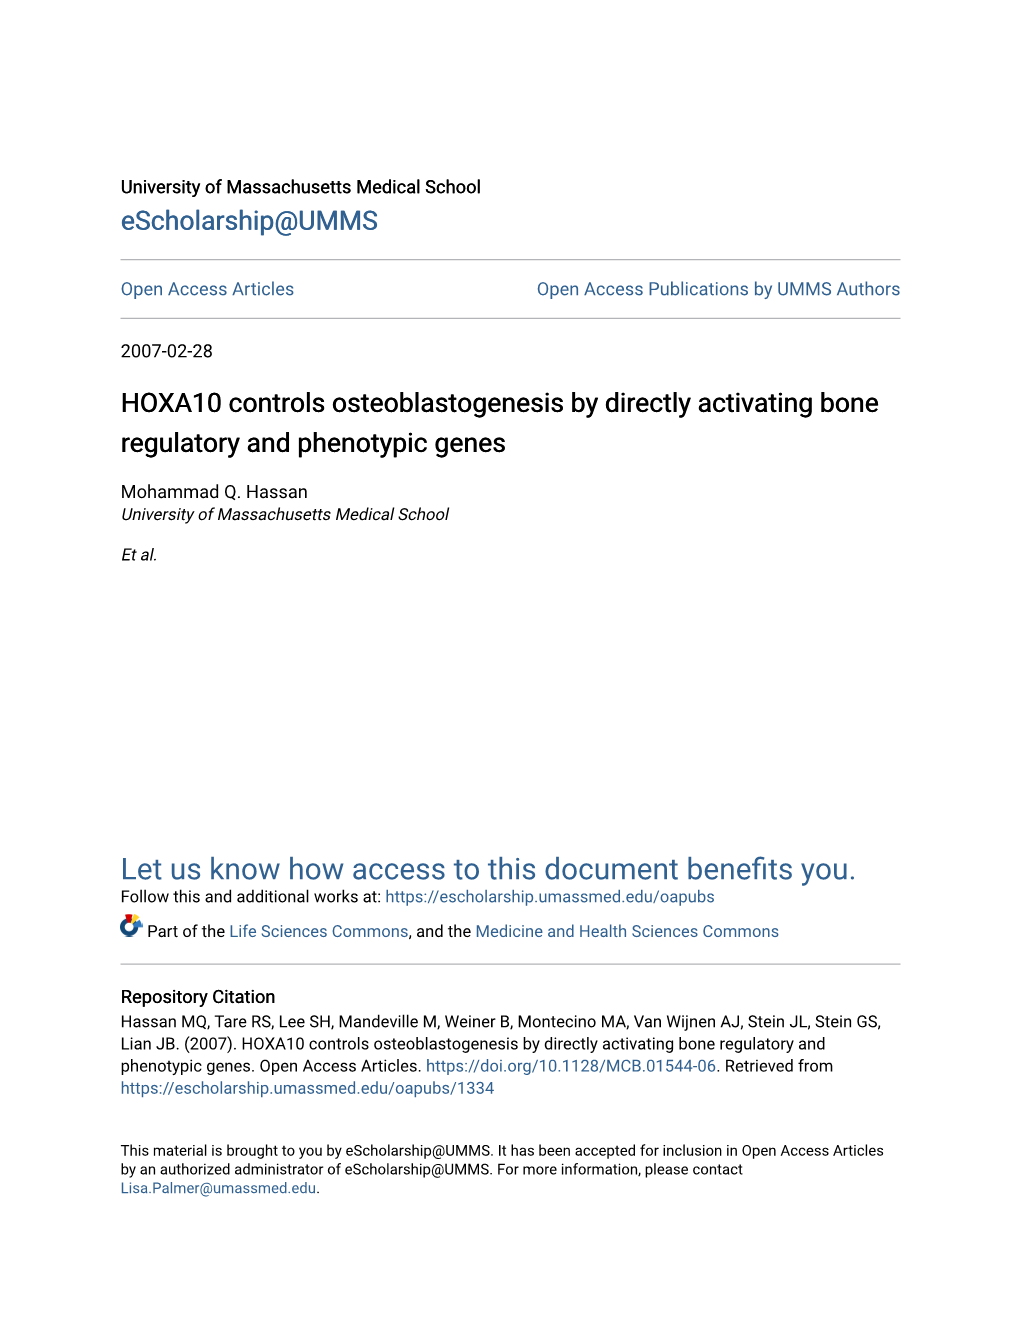 HOXA10 Controls Osteoblastogenesis by Directly Activating Bone Regulatory and Phenotypic Genes